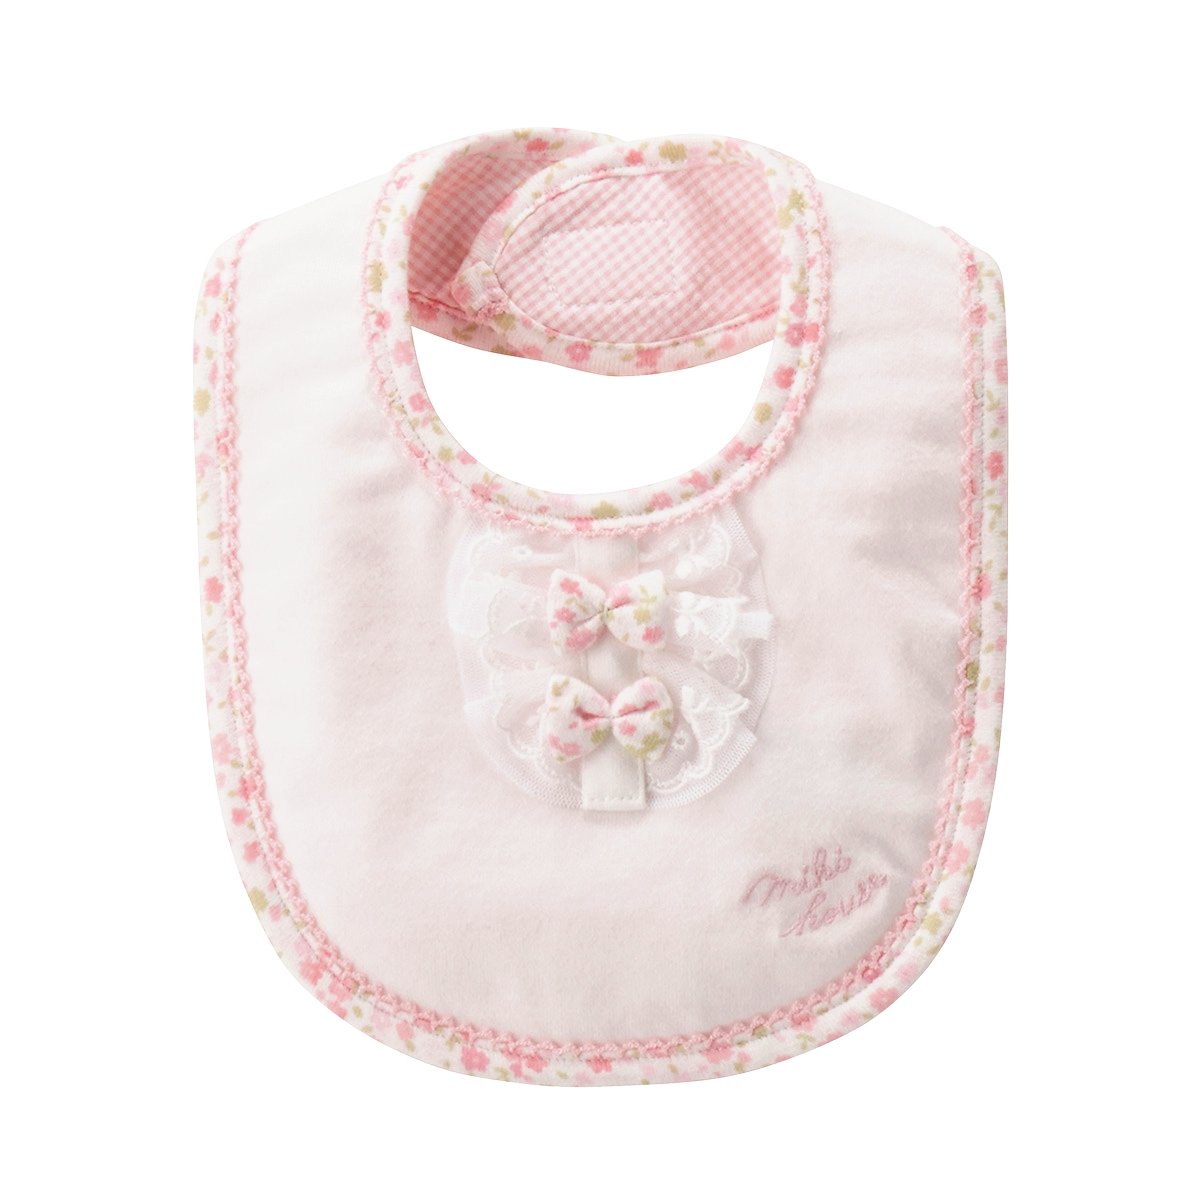 Amazon.com : Organic Baby Gift Basket for Boys and Girls - Newborn  Essentials and Handmade Toy : Baby